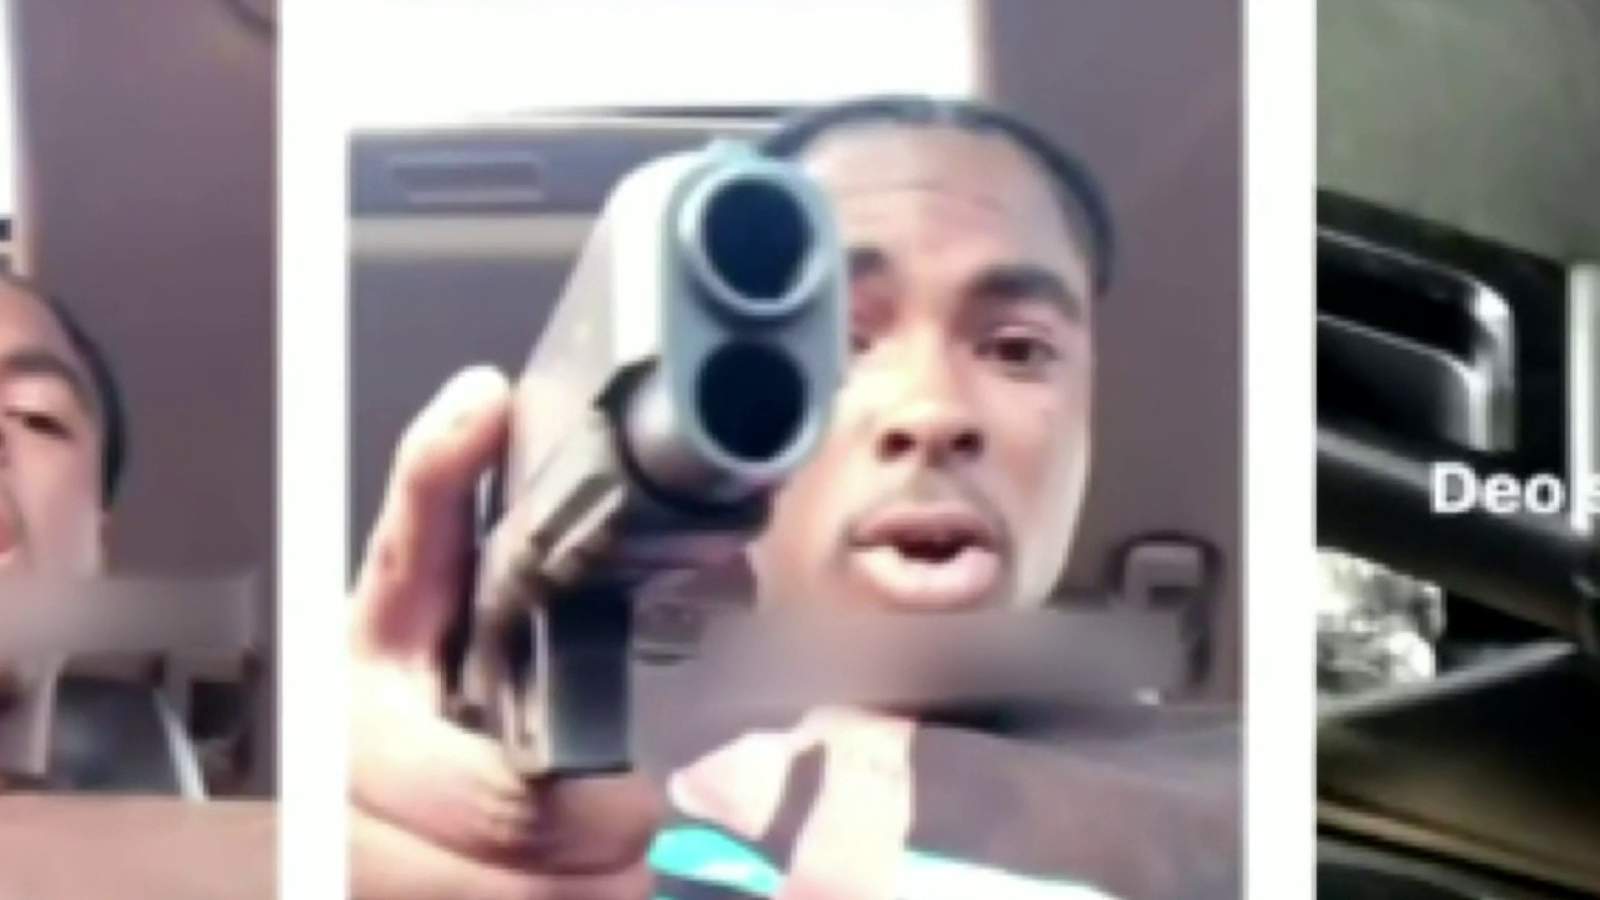 Detroit man faces charges after making social media posts showing guns, marijuana